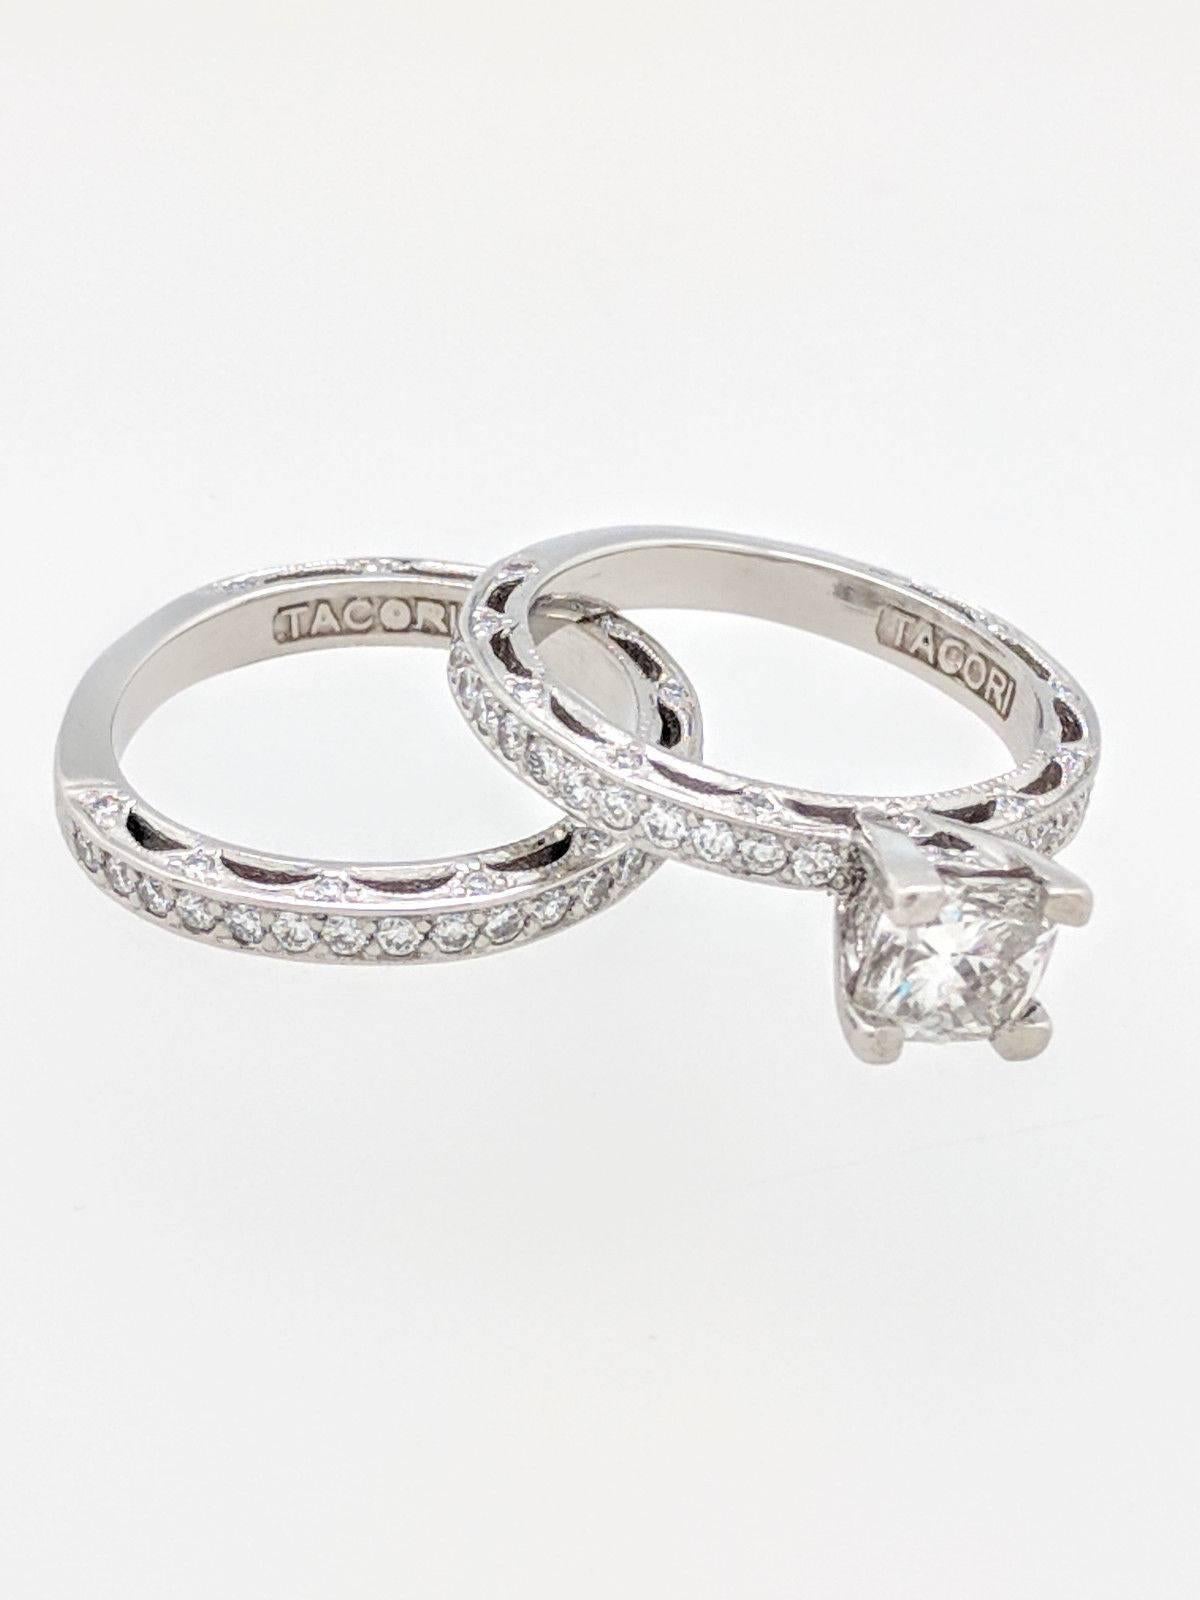 Platinum Tacori 1.05ct Cushion Cut Diamond Engagement Ring, Matching Band SI1/G 6